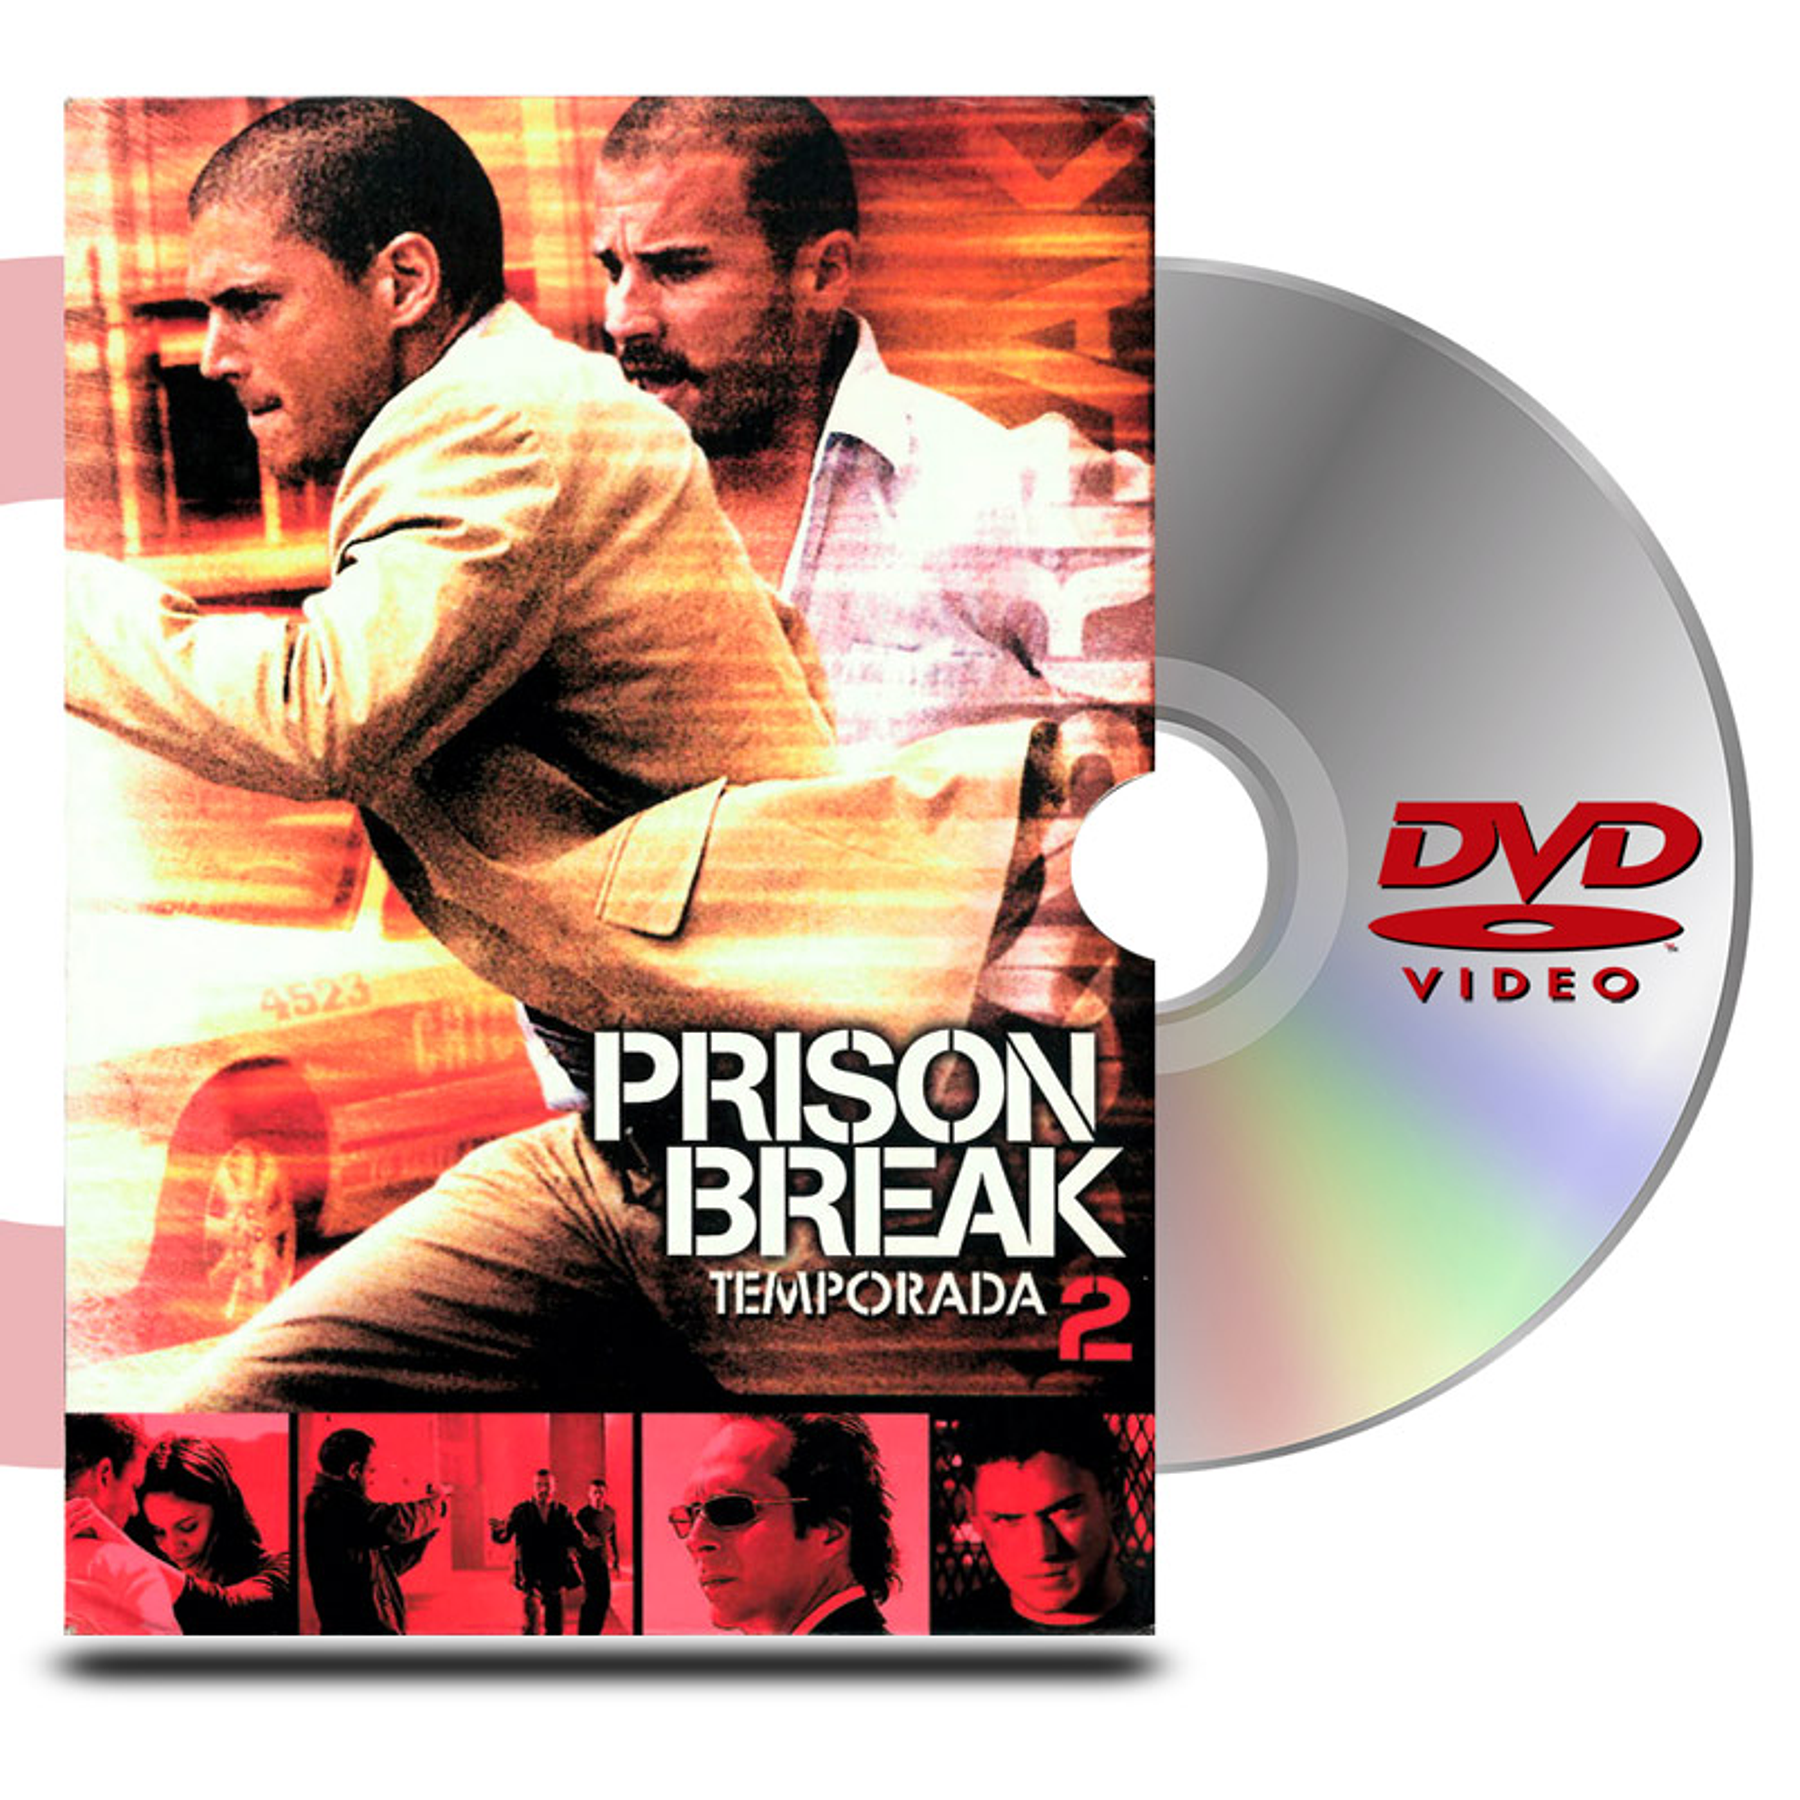 DVD PRISON BREAK TEMP 2 (6 DISCOS)